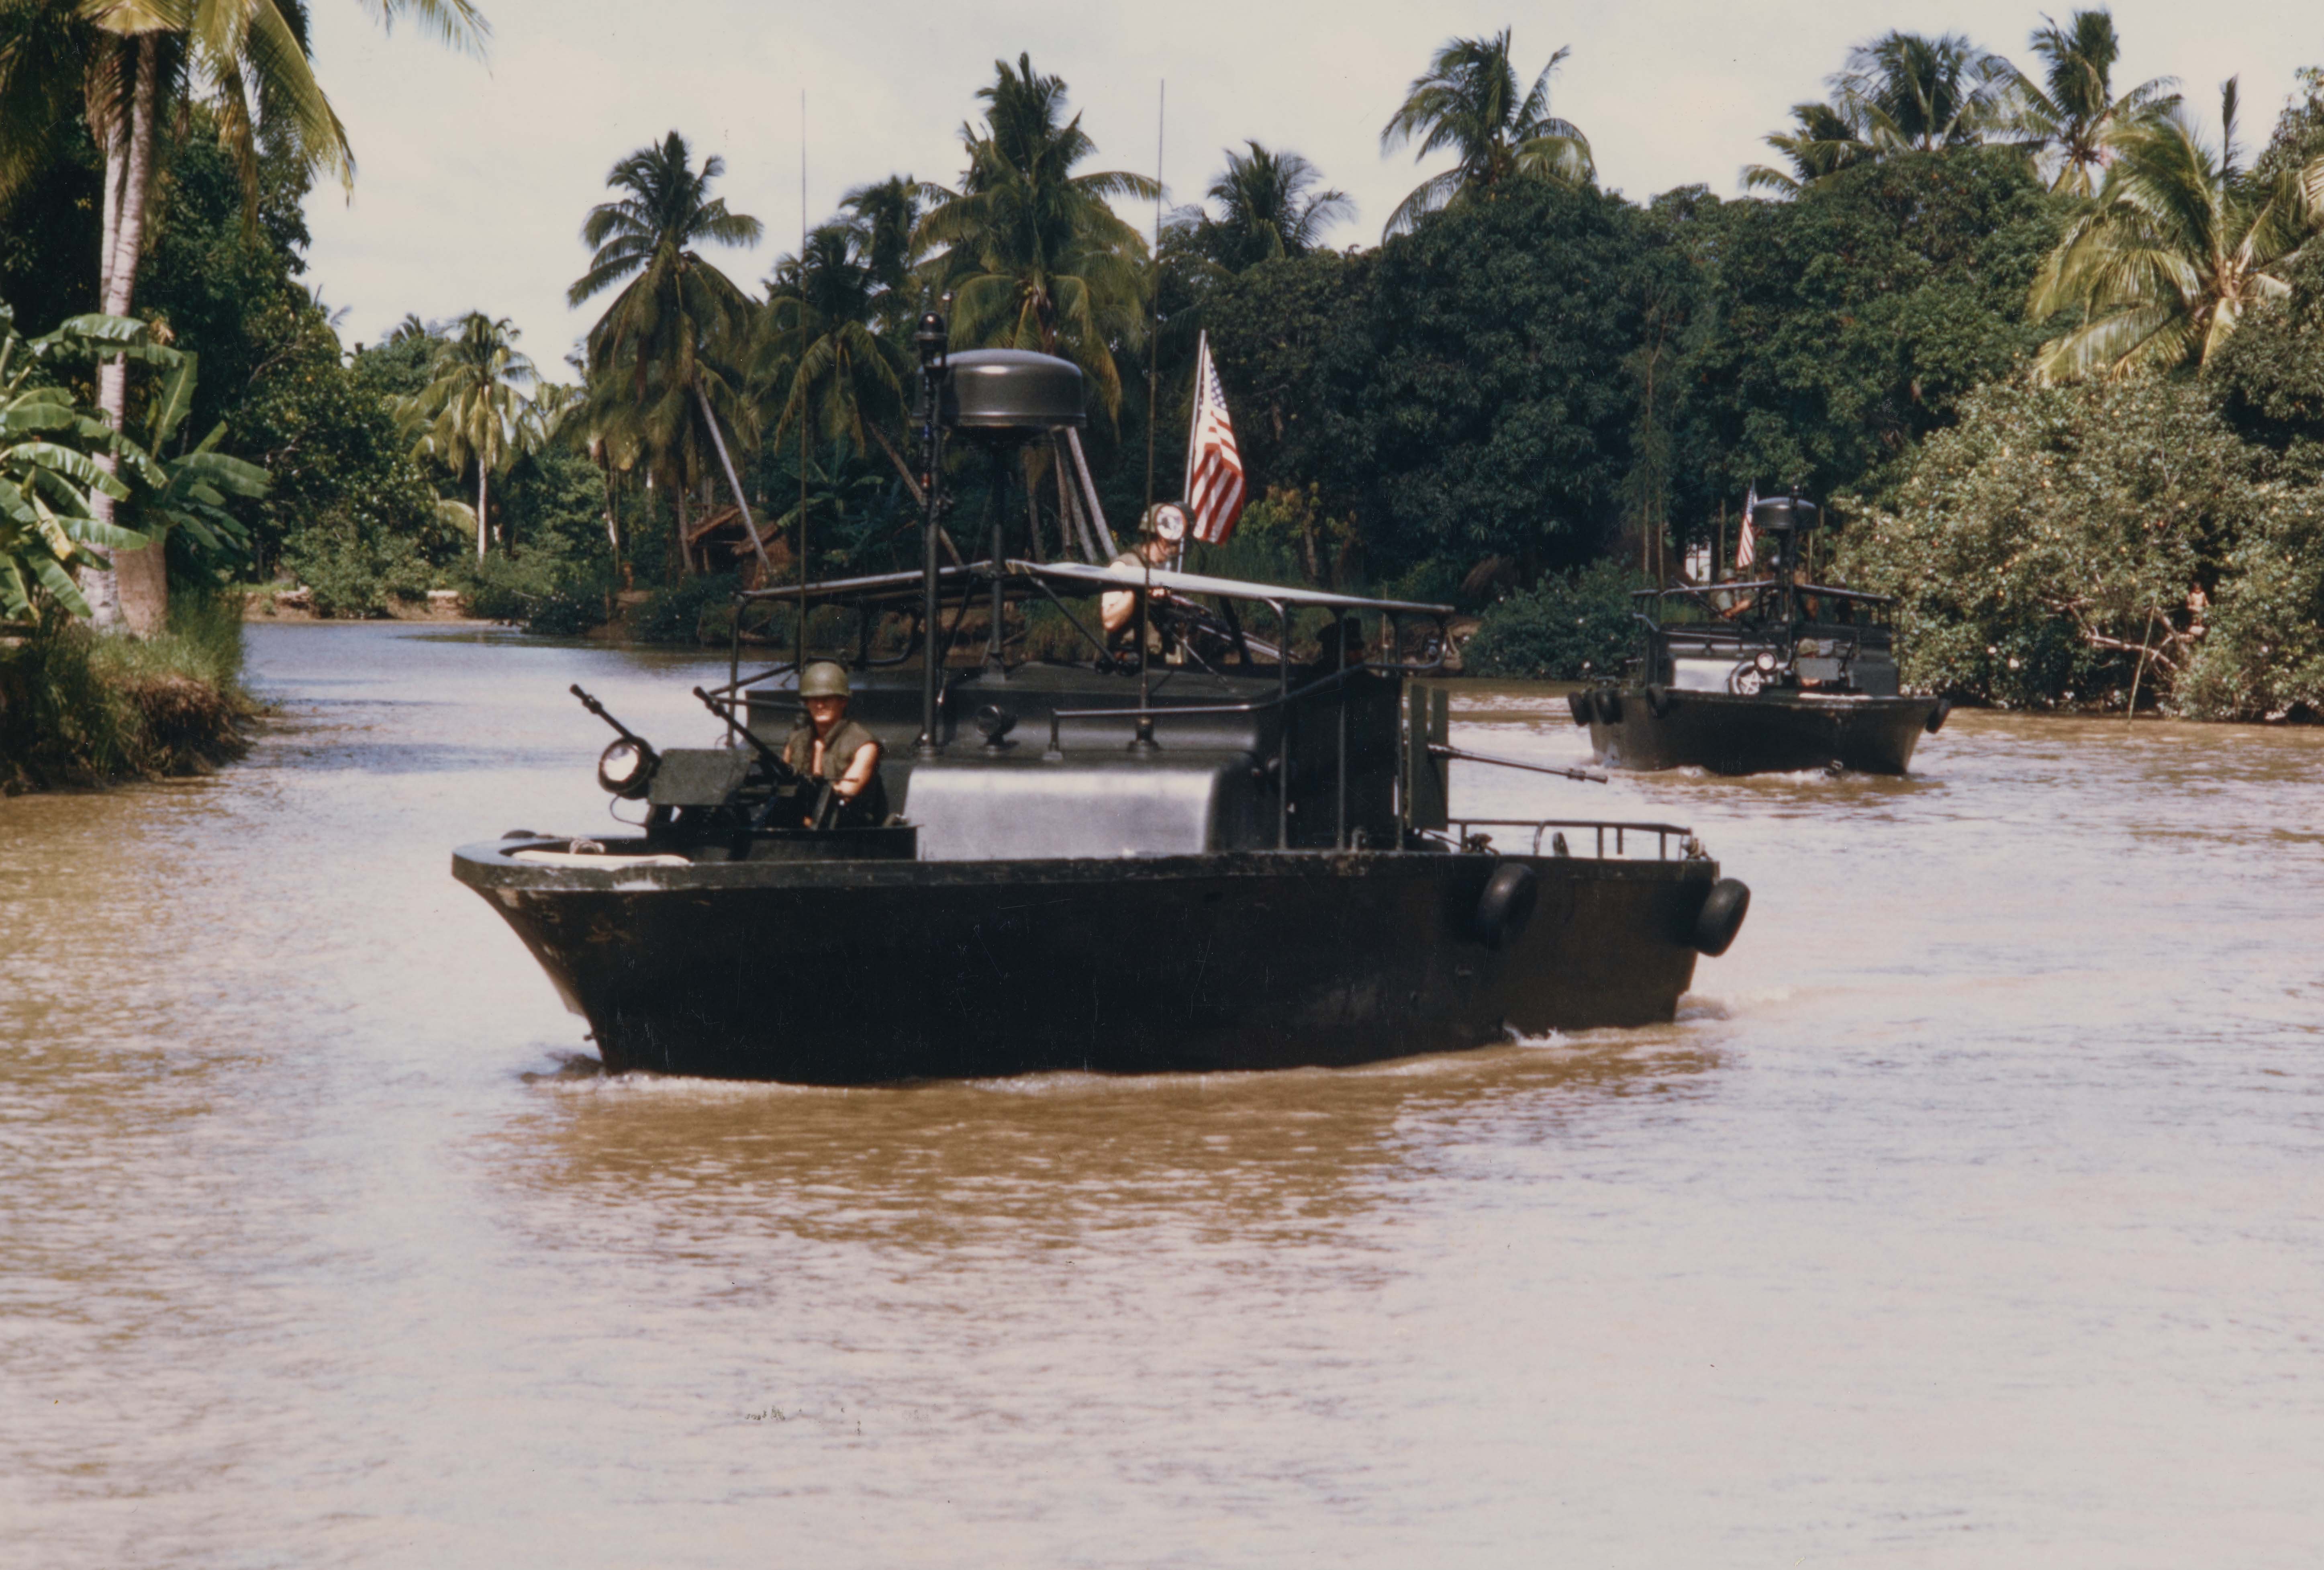 A U.S. Navy PBR patrols the Bassac River, Vietnam